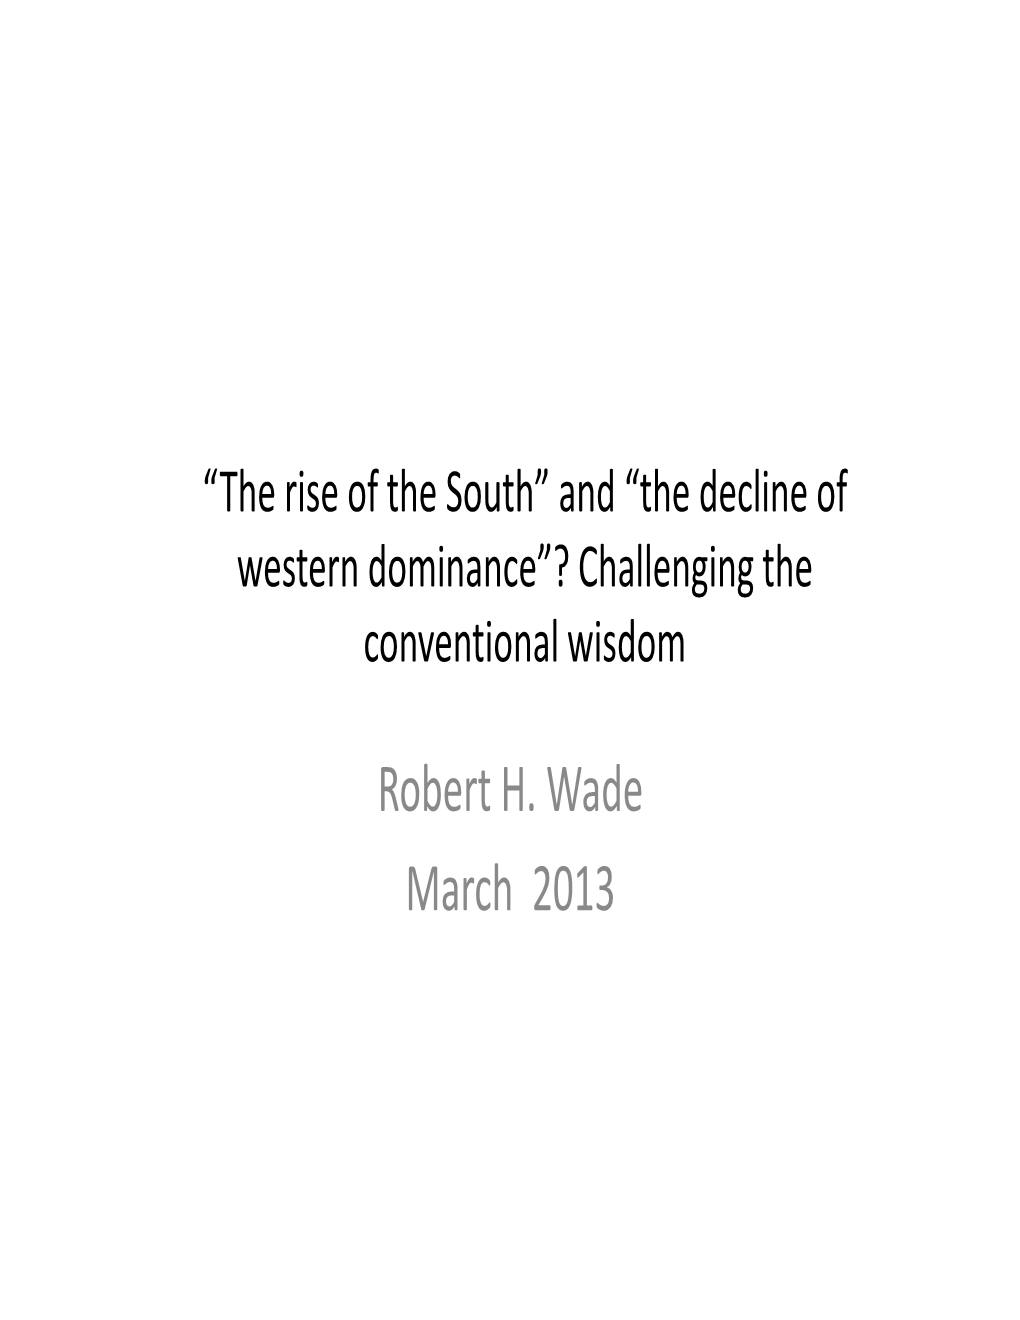 Robert H. Wade March 2013